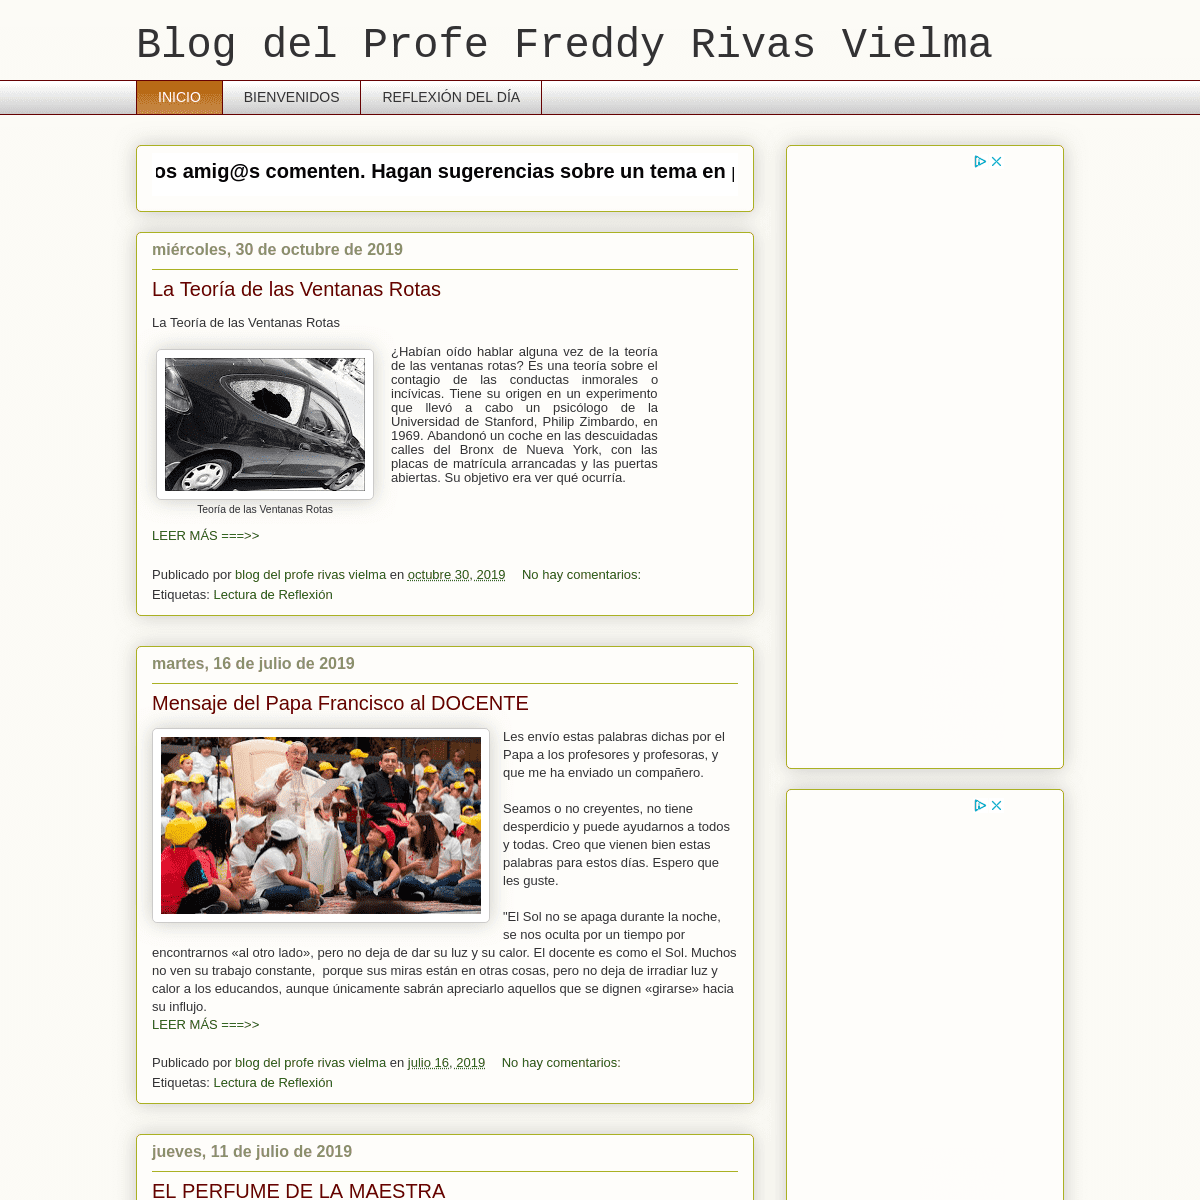 A complete backup of proferivasvielma.blogspot.com